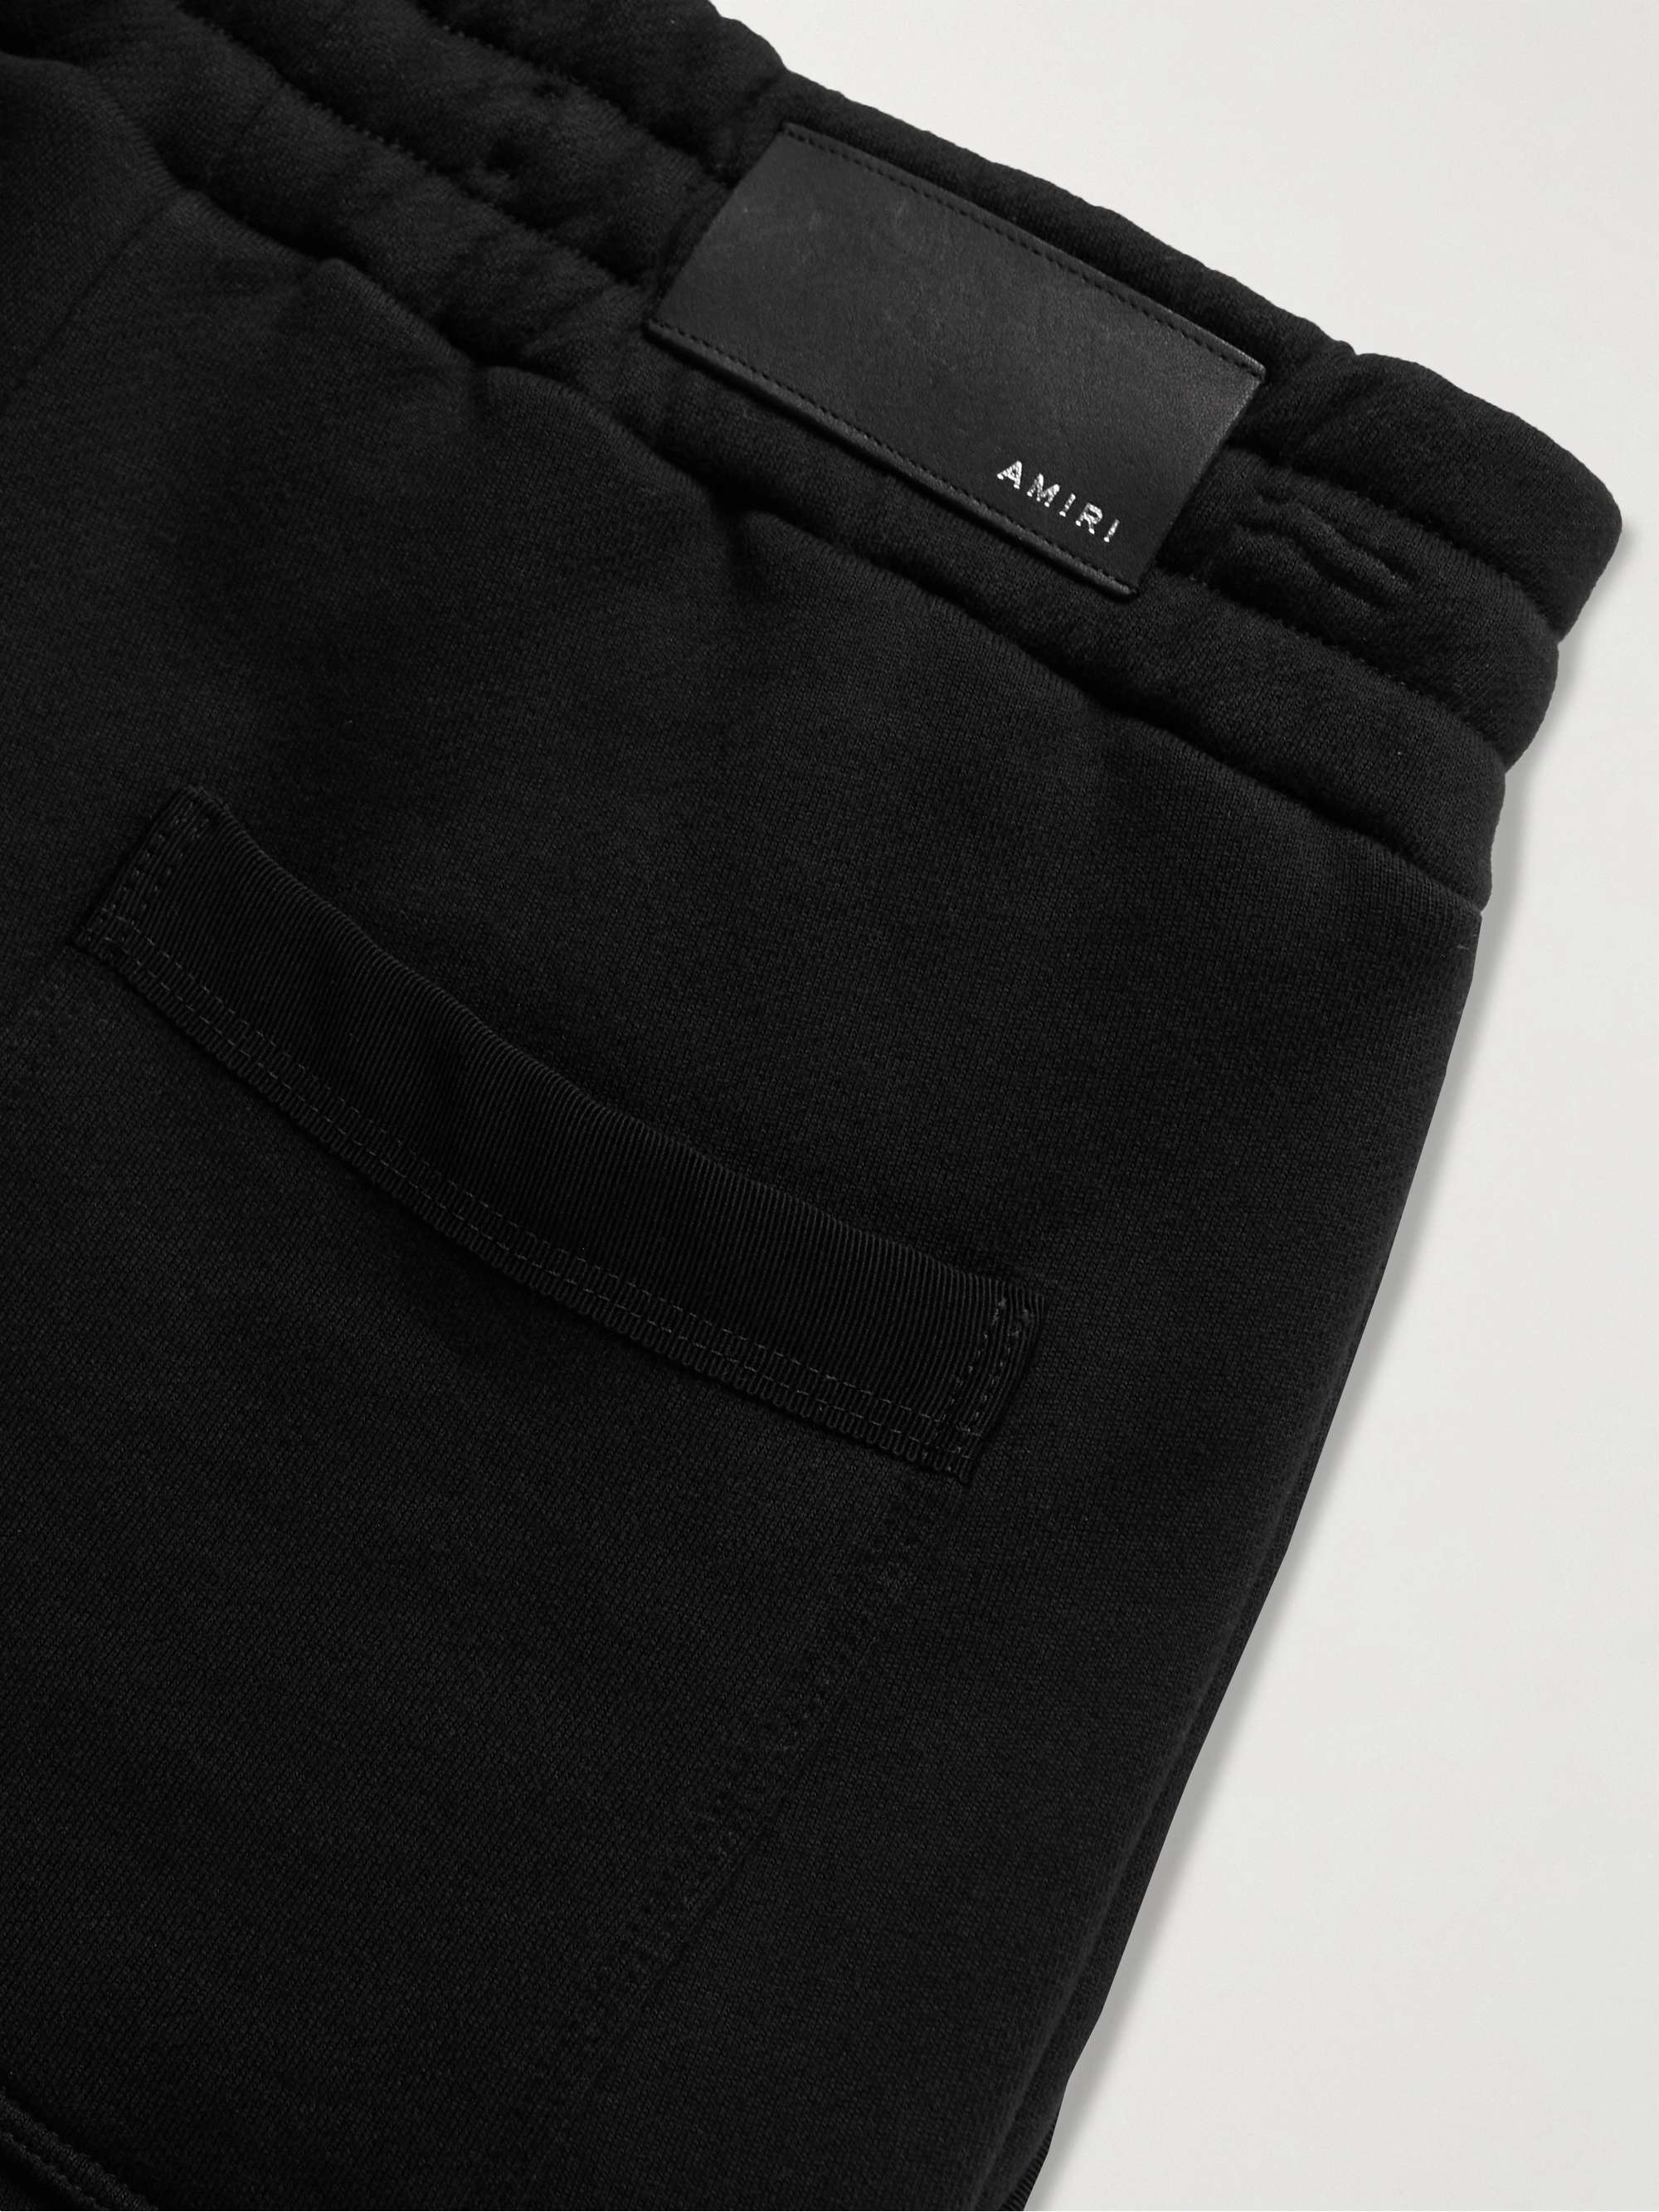 AMIRI Tapered Logo-Print Cotton-Jersey Sweatpants